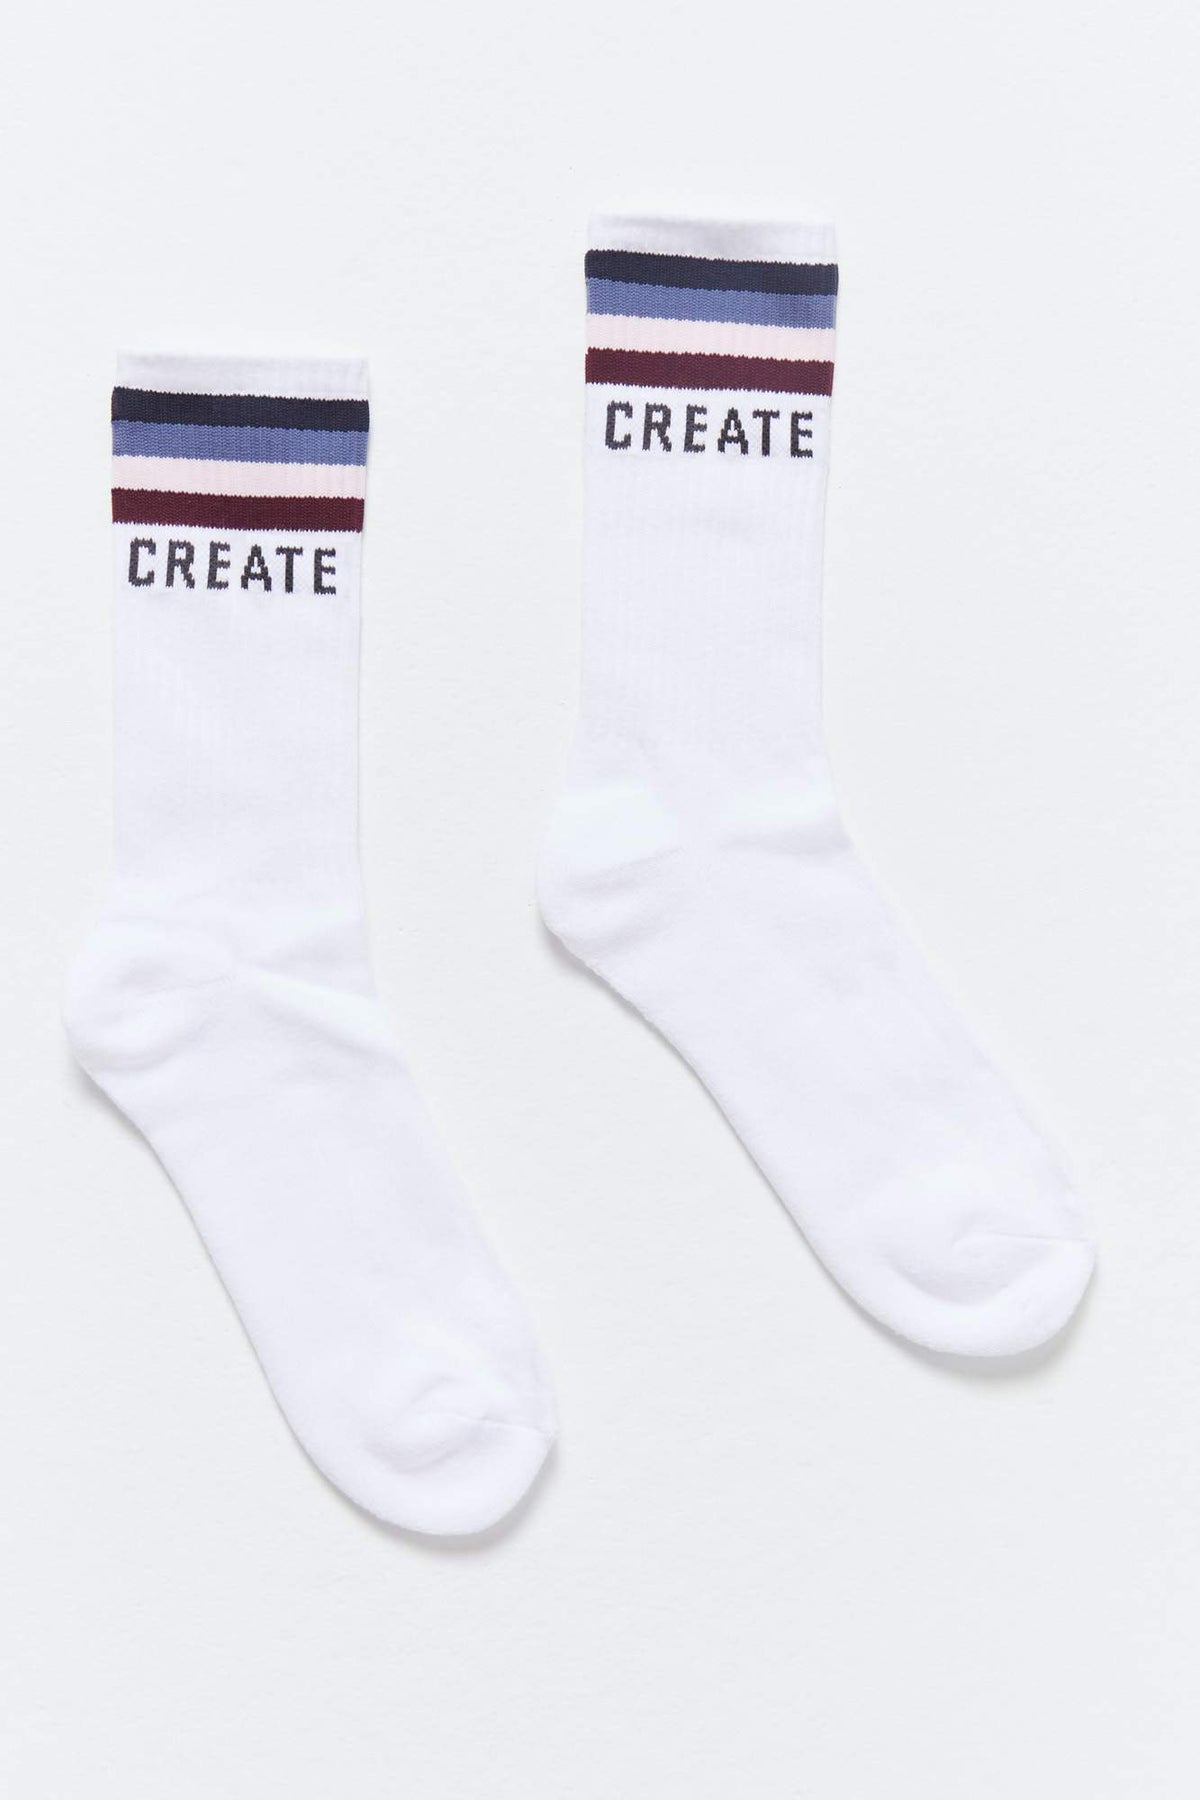 Create SG Sock